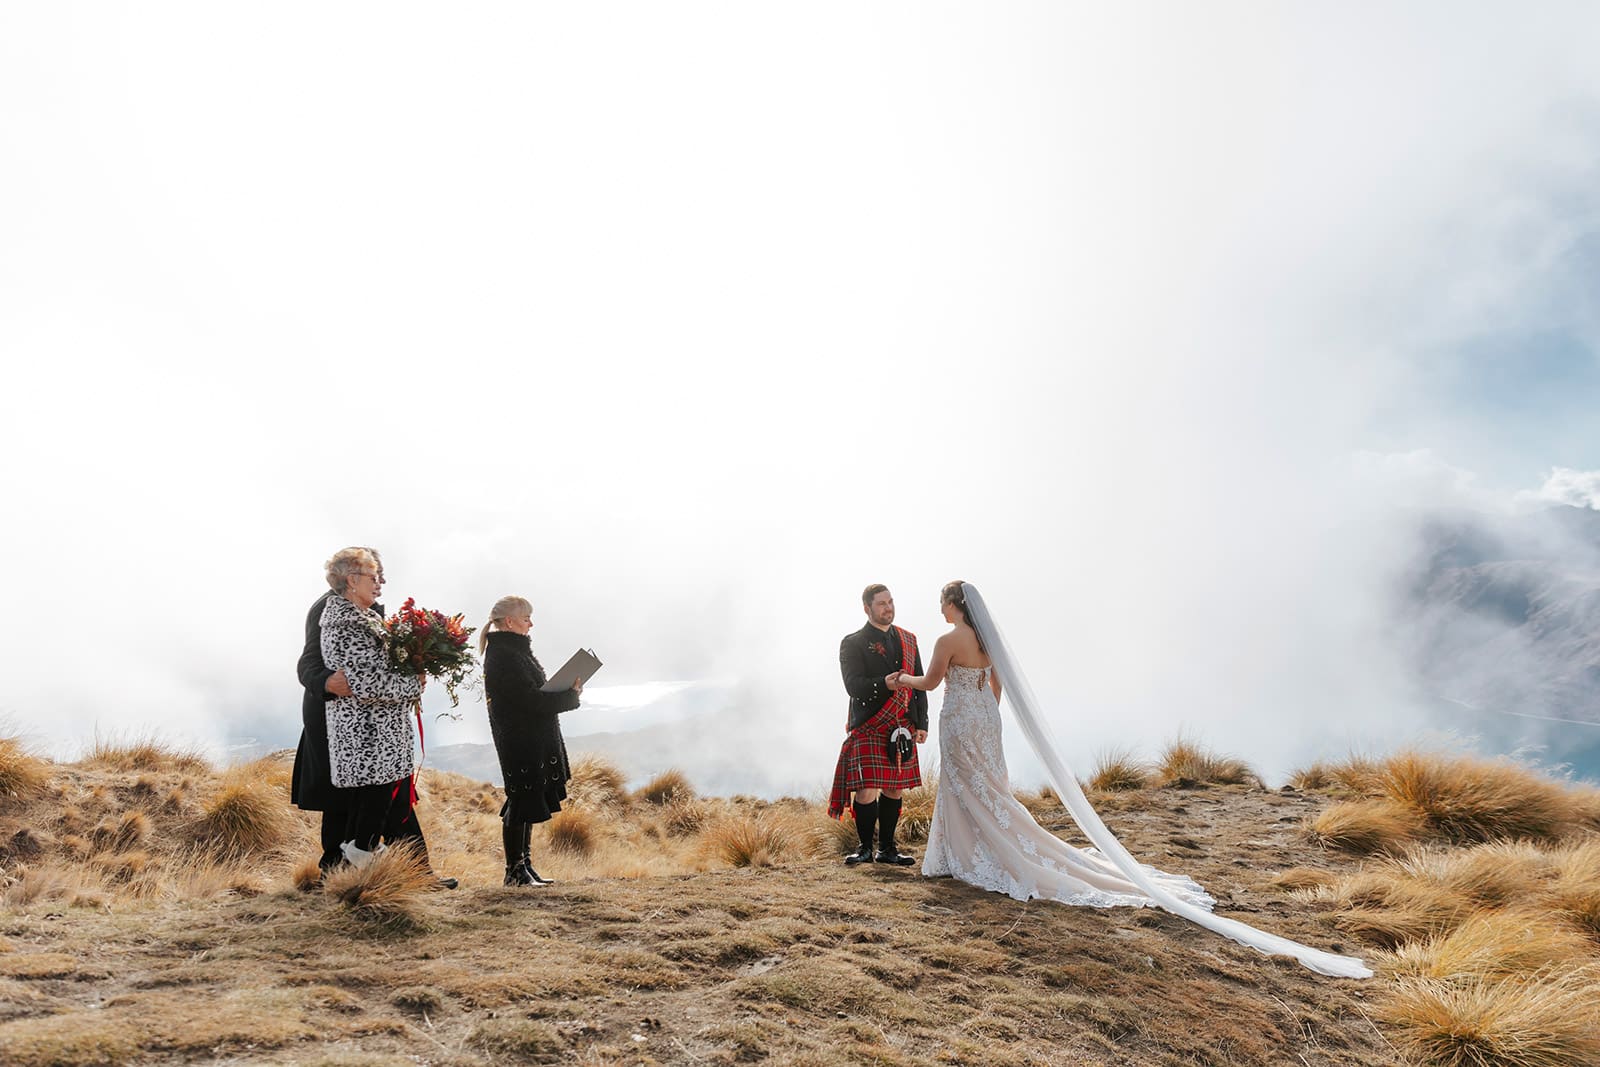 Scottish themed Heli Wedding on Coromandel Peak in Wanaka